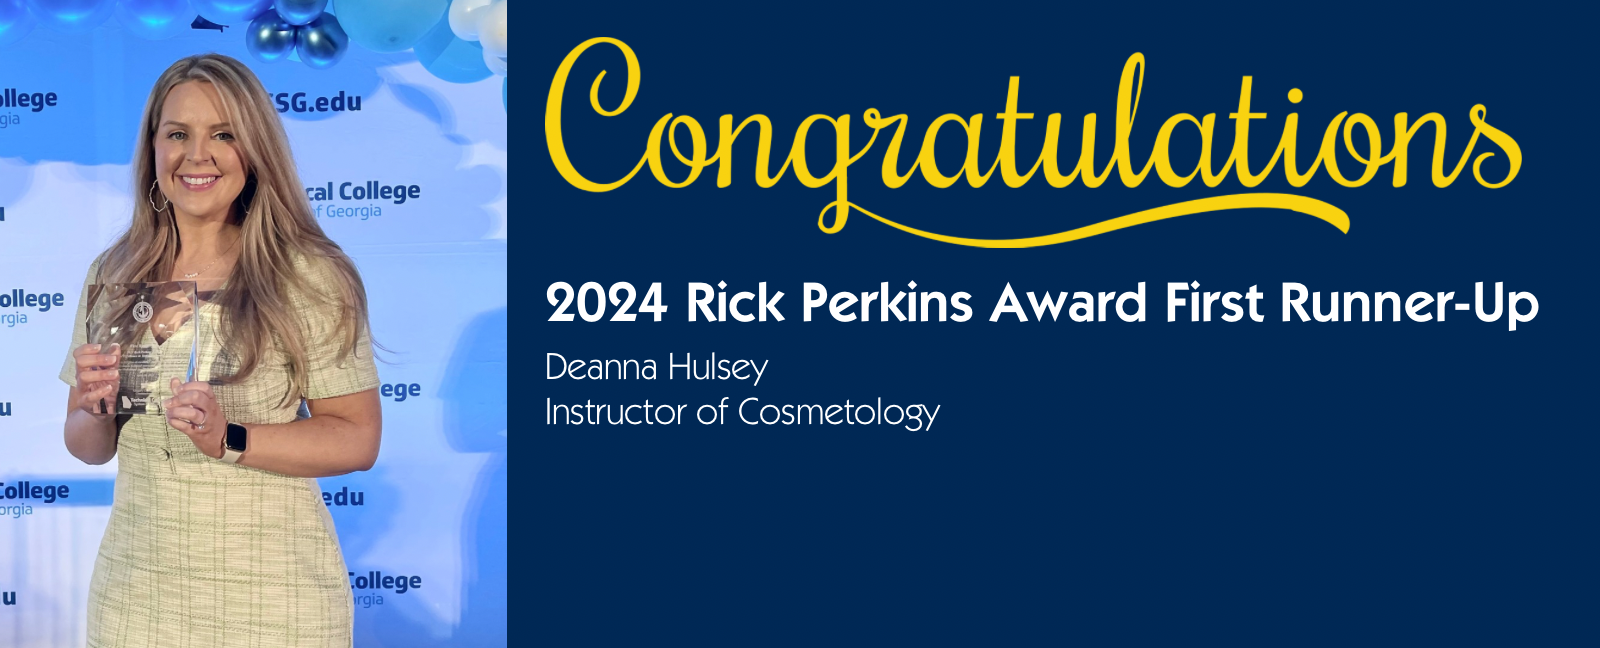 Congratulations 
2024 Rick Perkins Award First Runner-Up
Deanna Hulsey
Instructor of Cosmetology